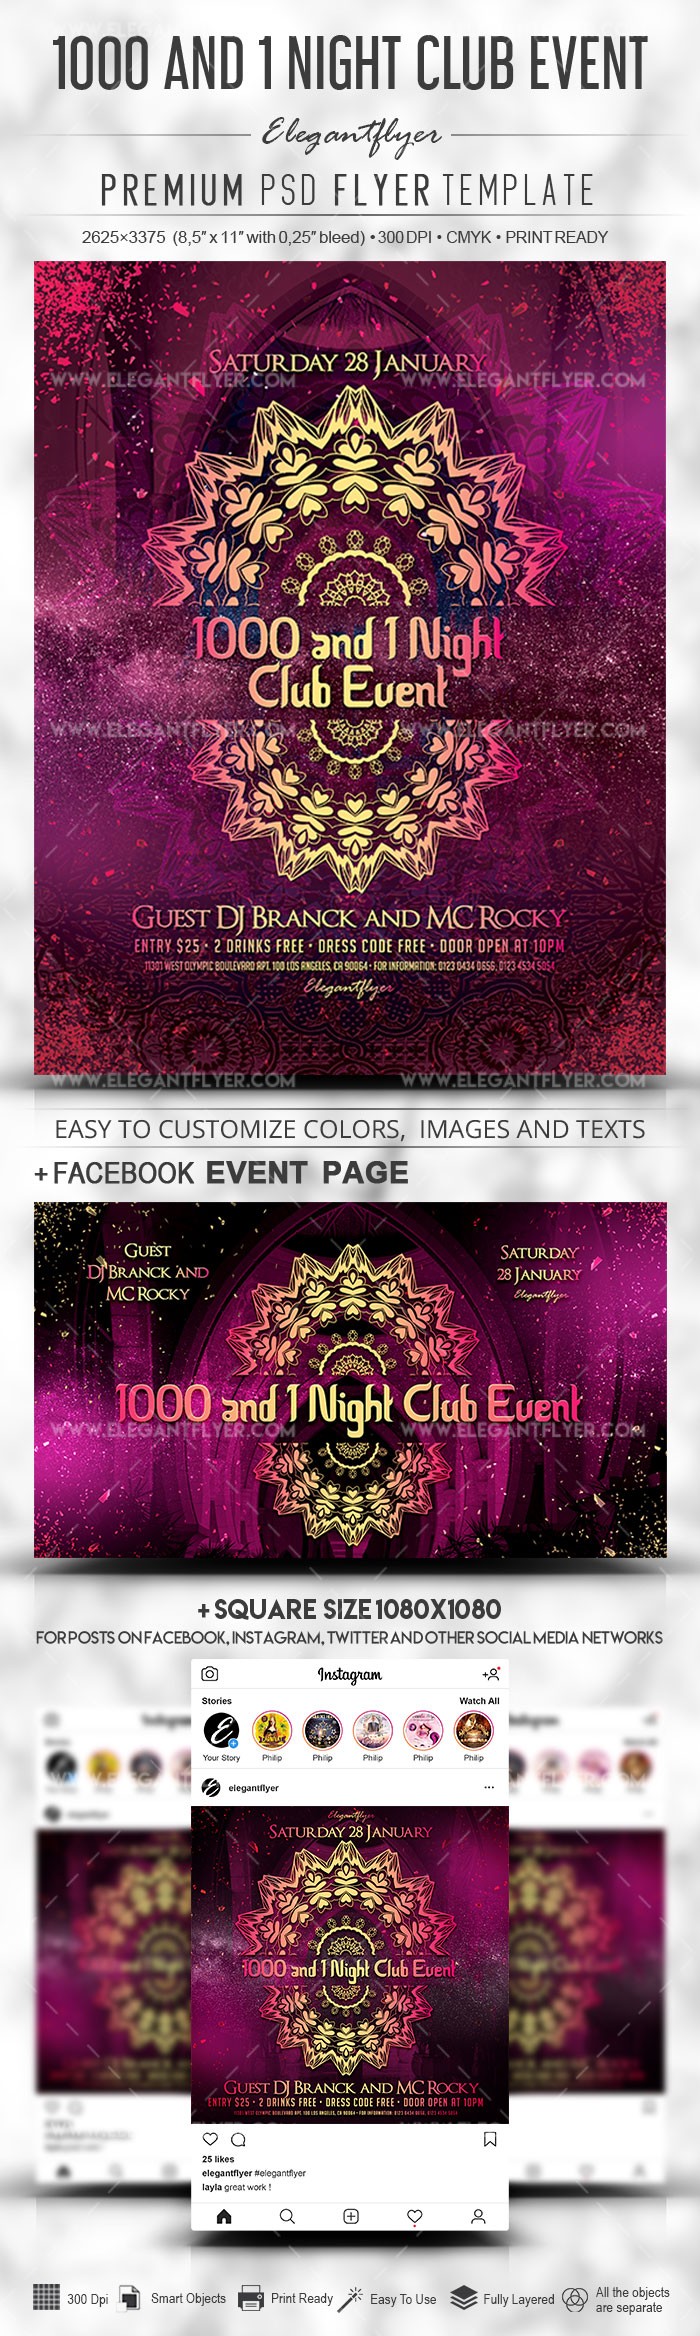 Evento "1000 e 1 notte" del club. by ElegantFlyer